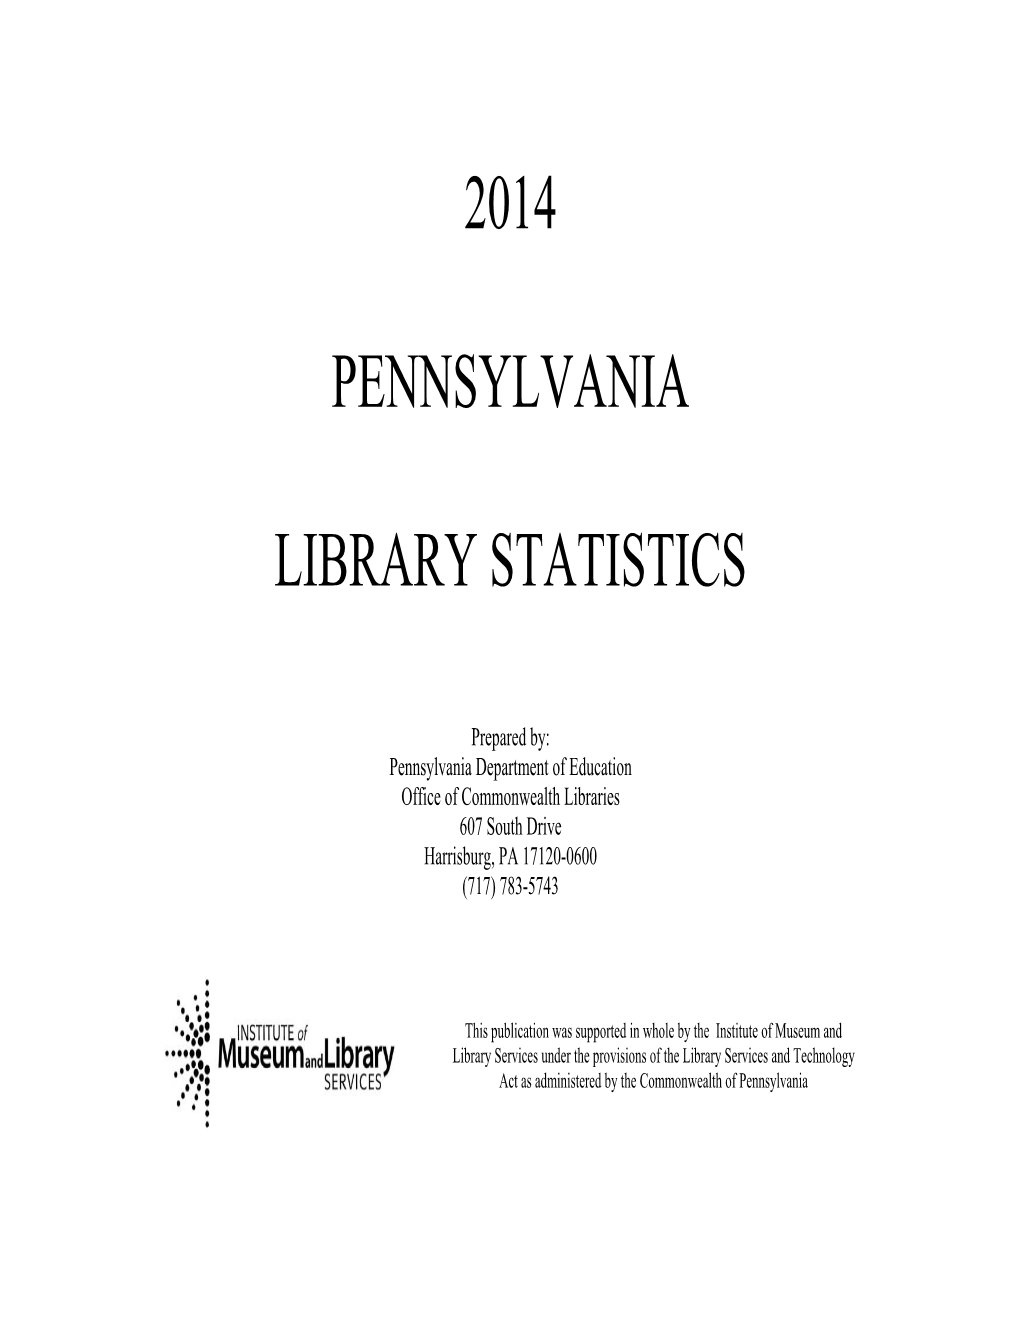 2014 PA Public Library Statistics